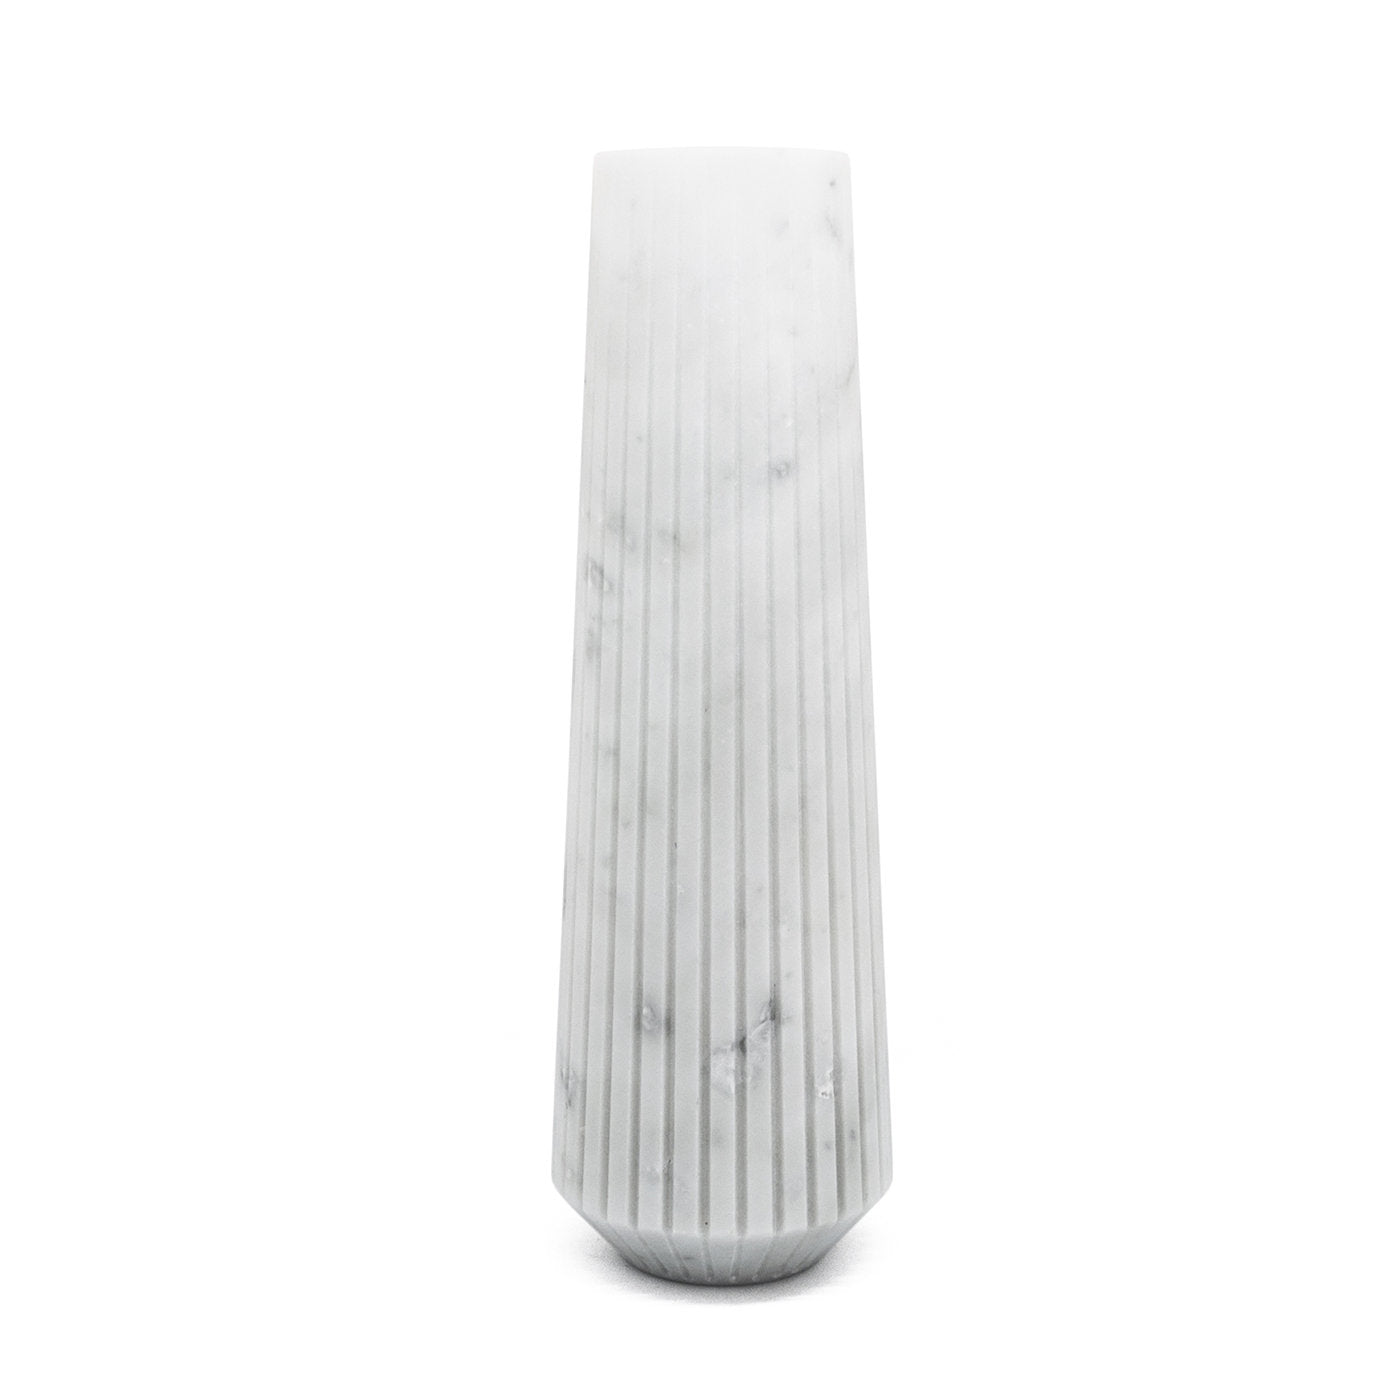 Grand vase en marbre blanc de Carrare Jacopo Simonetti - Vue alternative 1